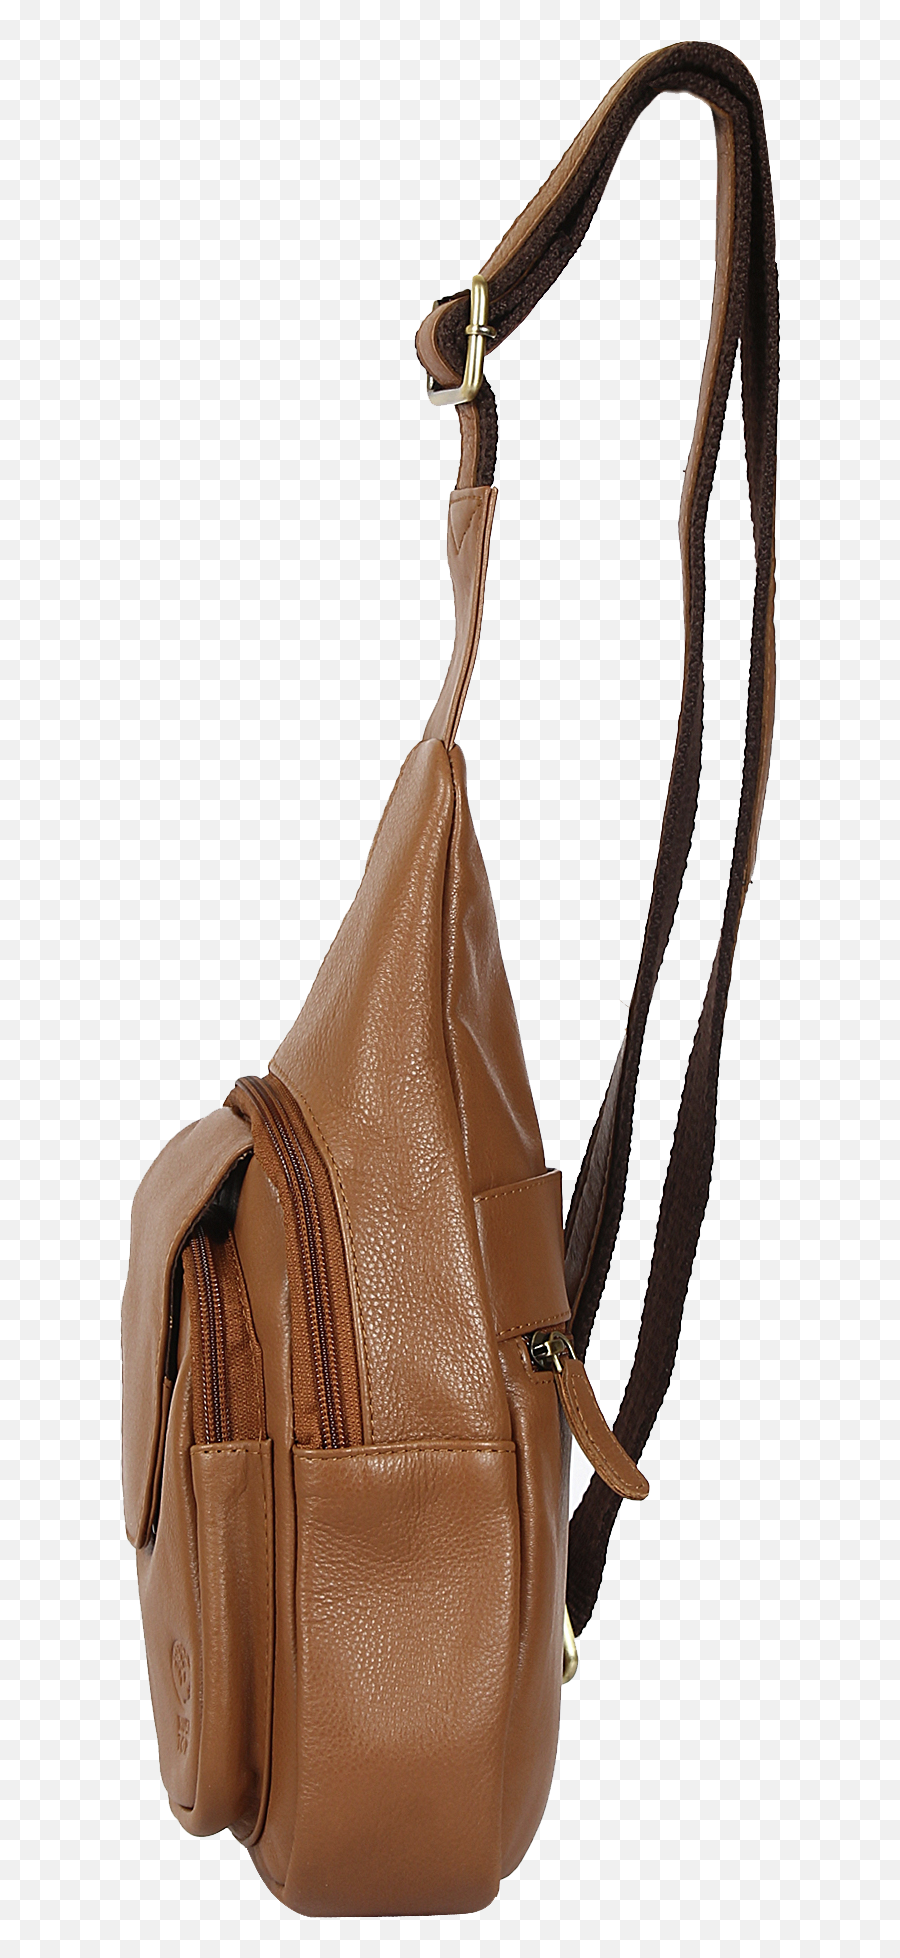 Leather Backpacks - Rustic Town Messenger Bag Emoji,Backpacks Bags Crossbody Shoulder W Emojis